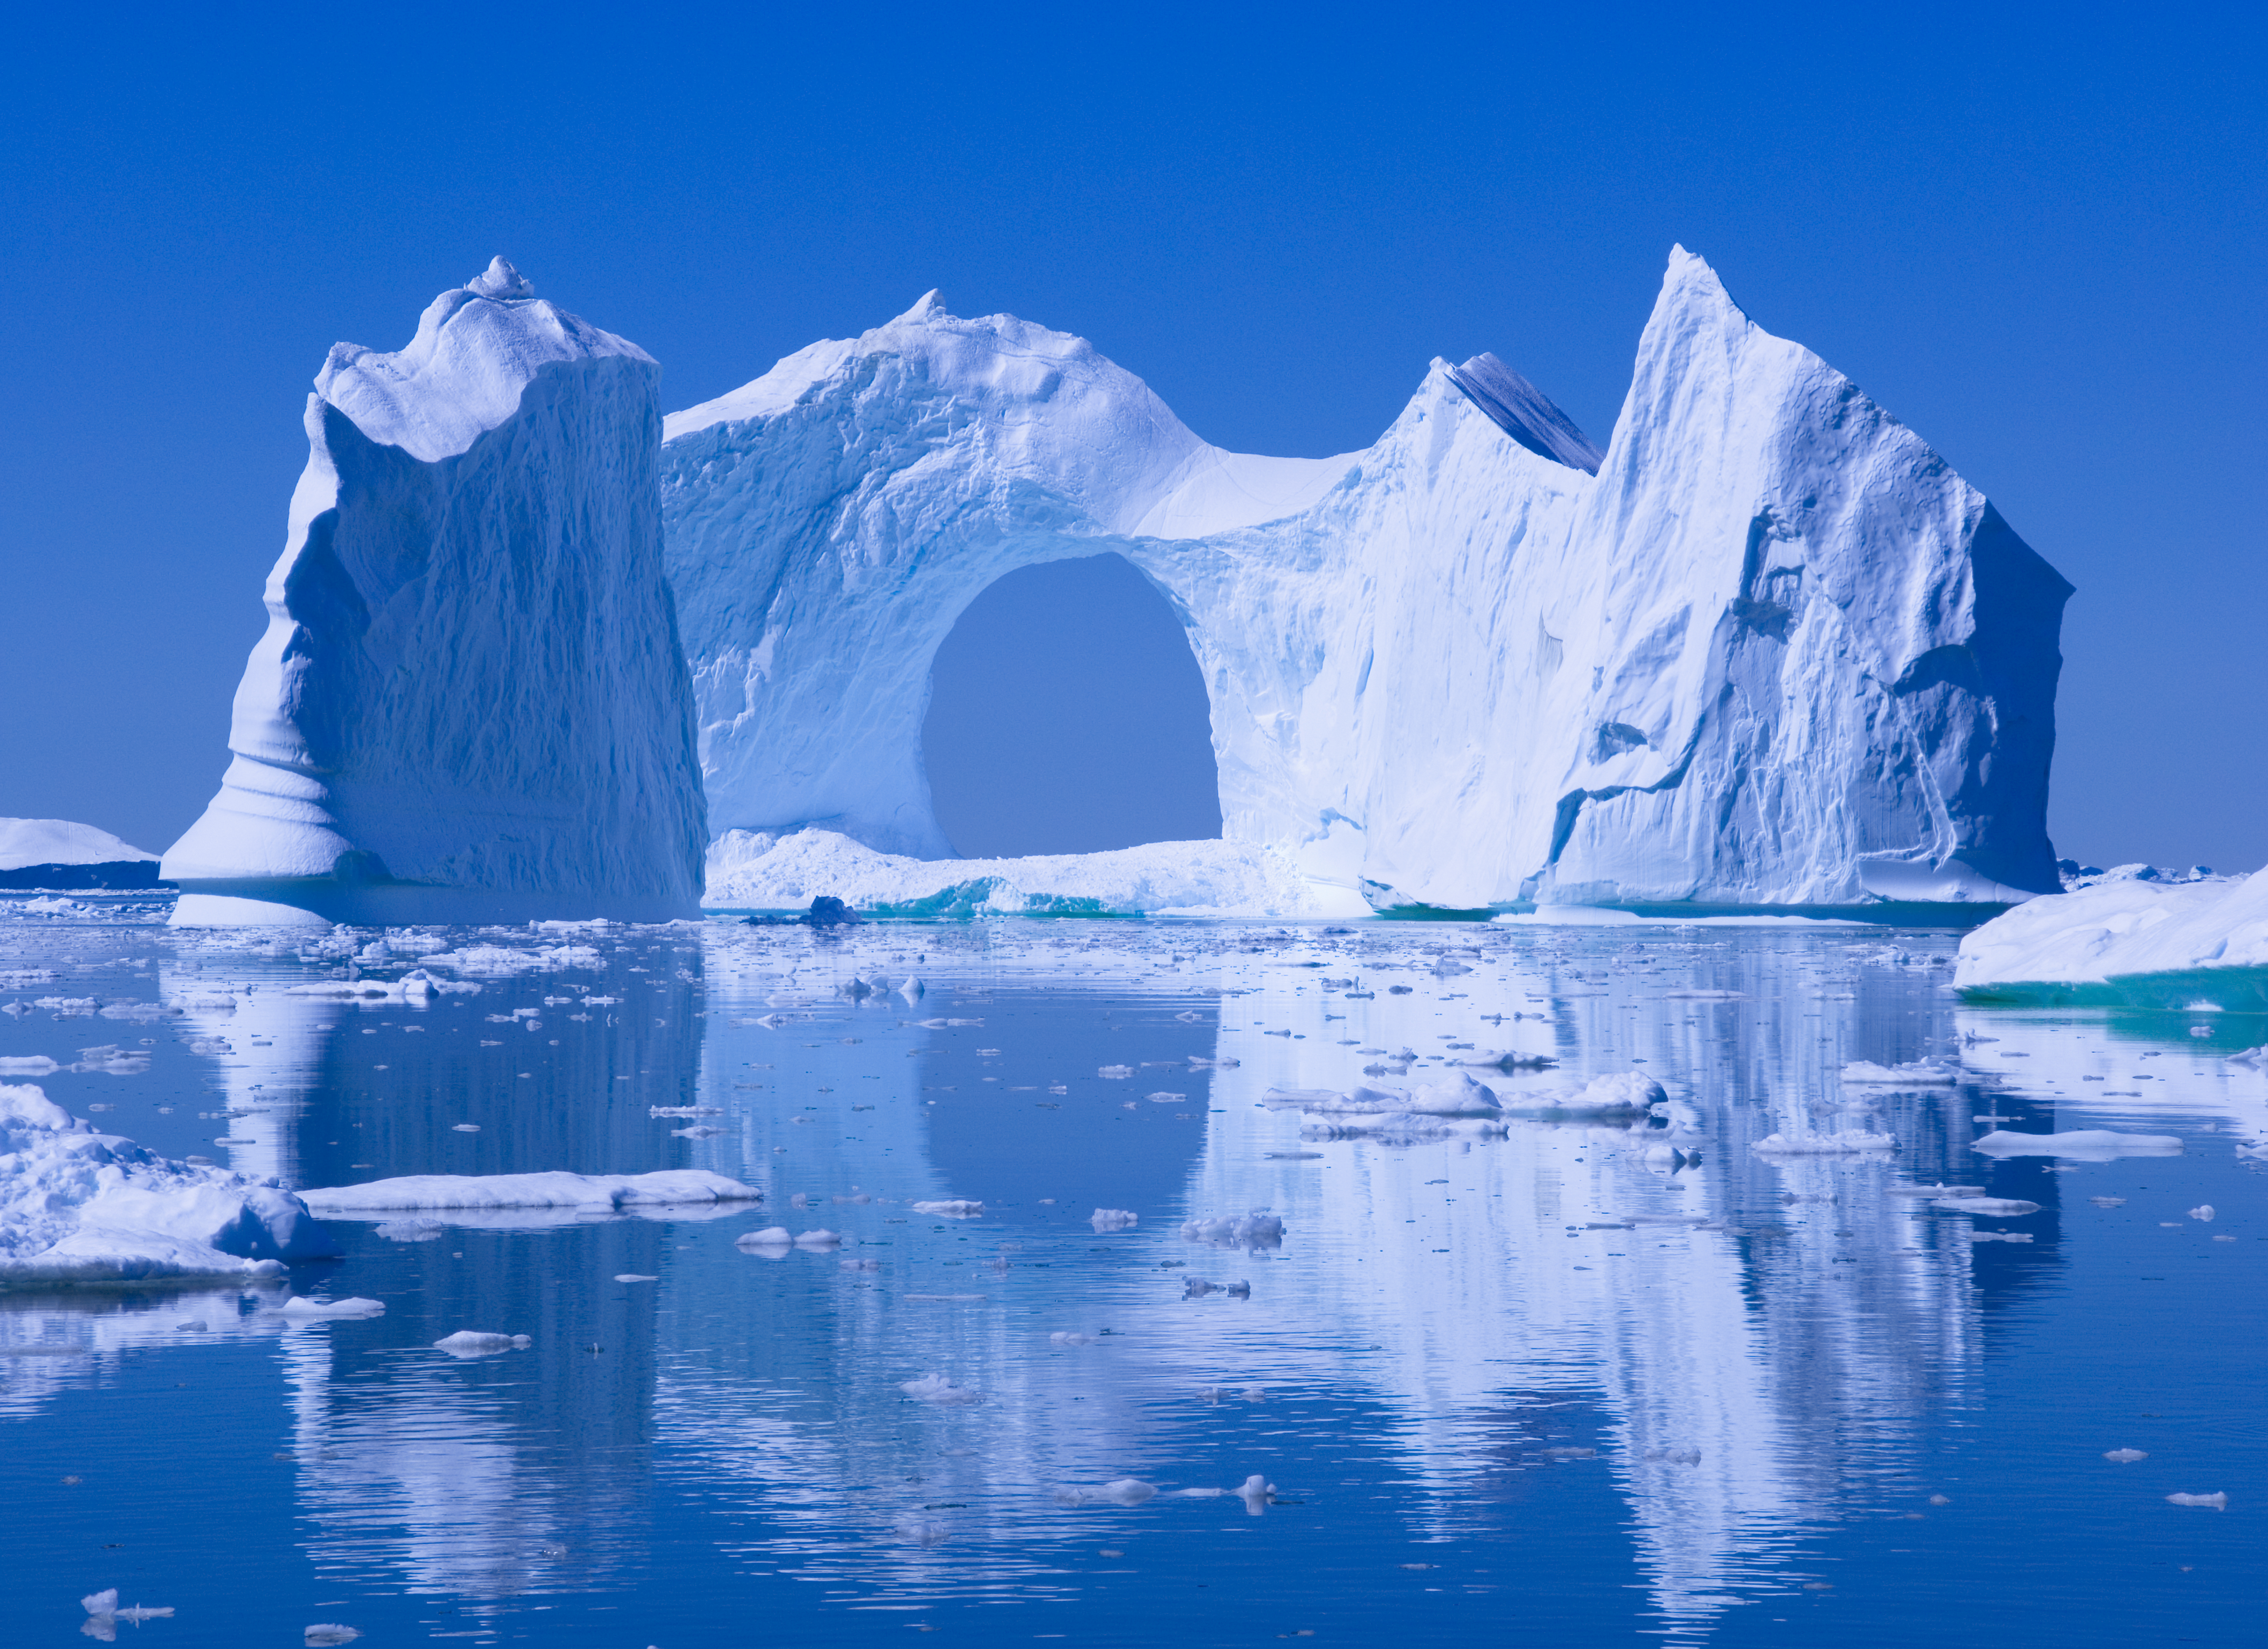 Amazing Iceberg Pictures & Backgrounds